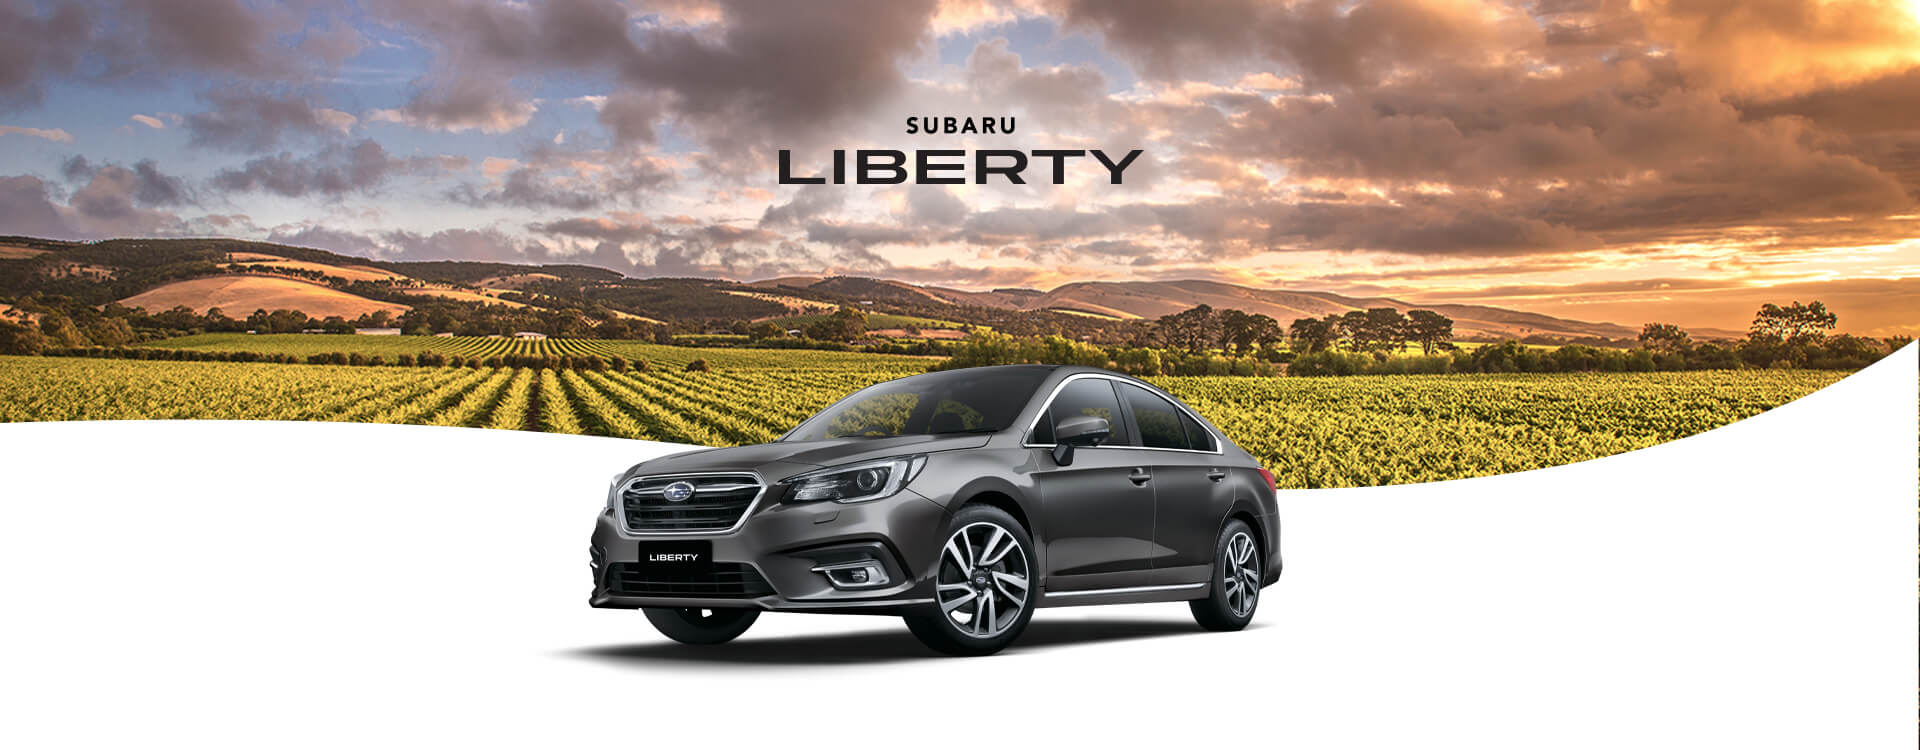 Subaru Liberty Image